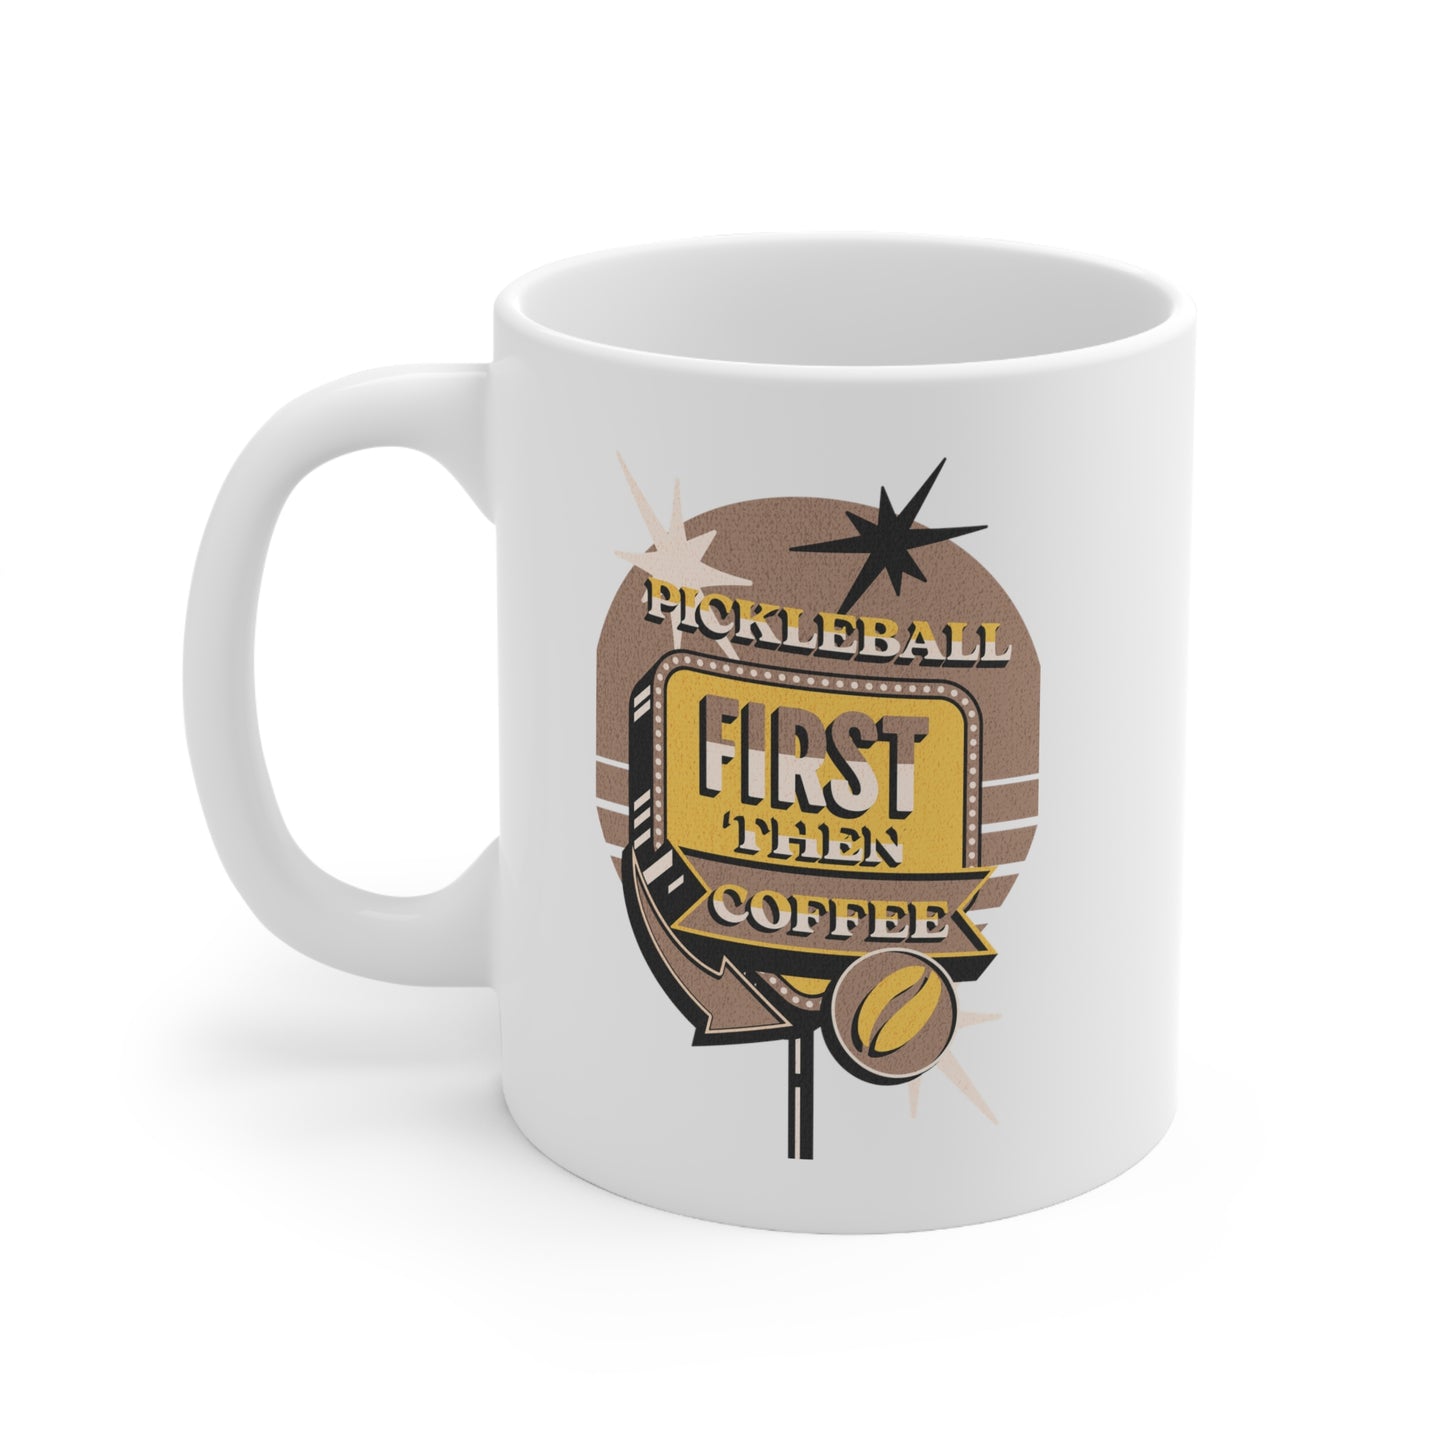 Pickleball Enthusiast's Coffee Mug: Pickleball Then Coffee